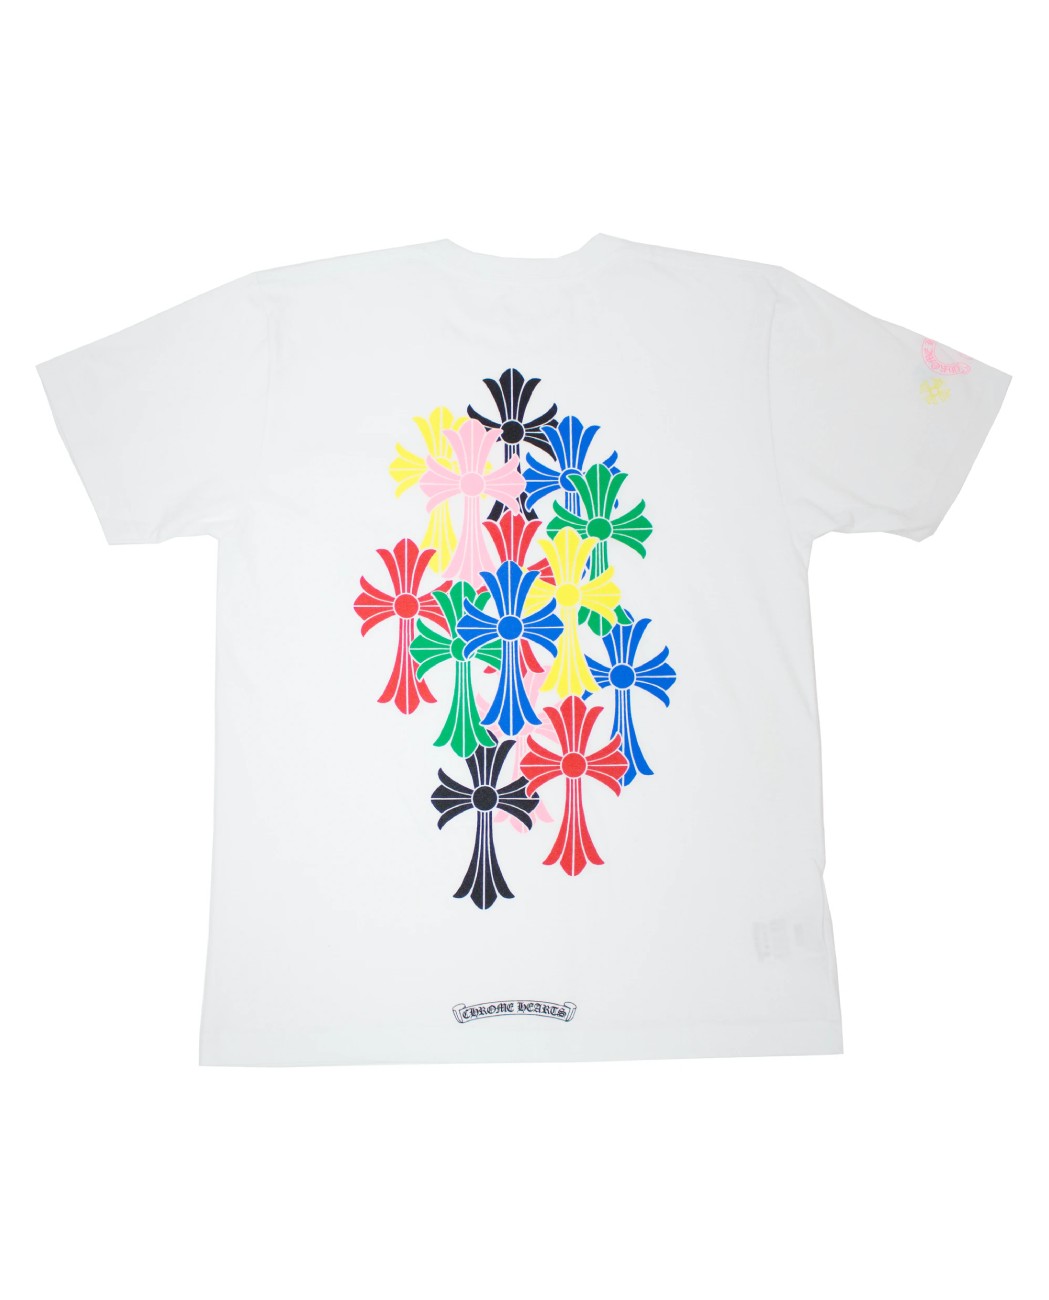 Chrome Hearts Cross Cemetery T-Shirt - Multi Color